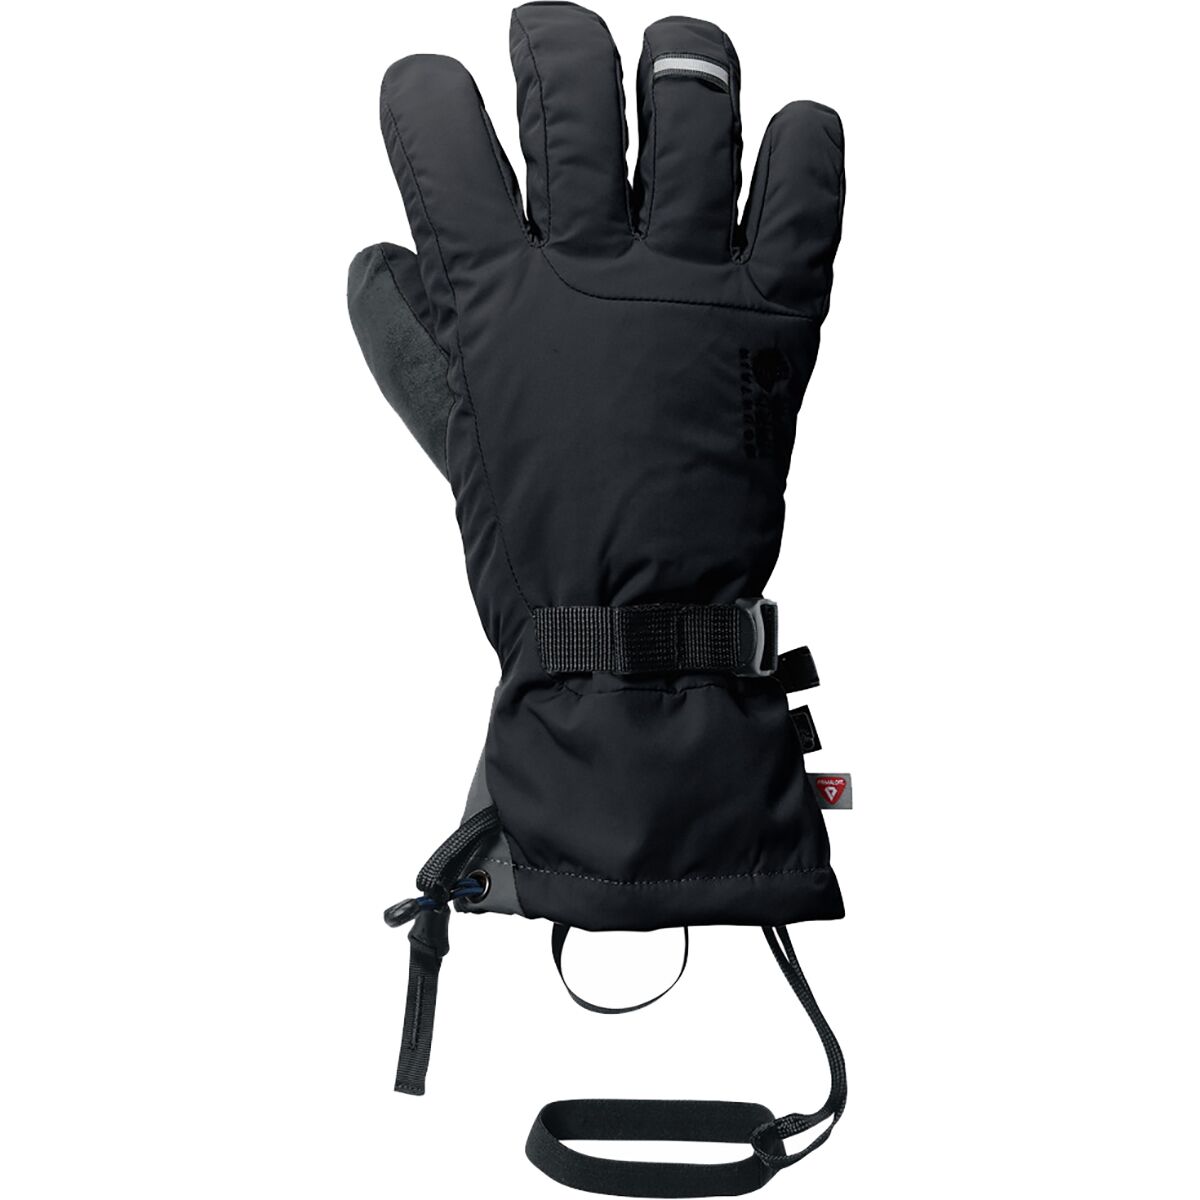 Mountain Hardwear FireFall/2 GORE-TEX Glove - Men's Black